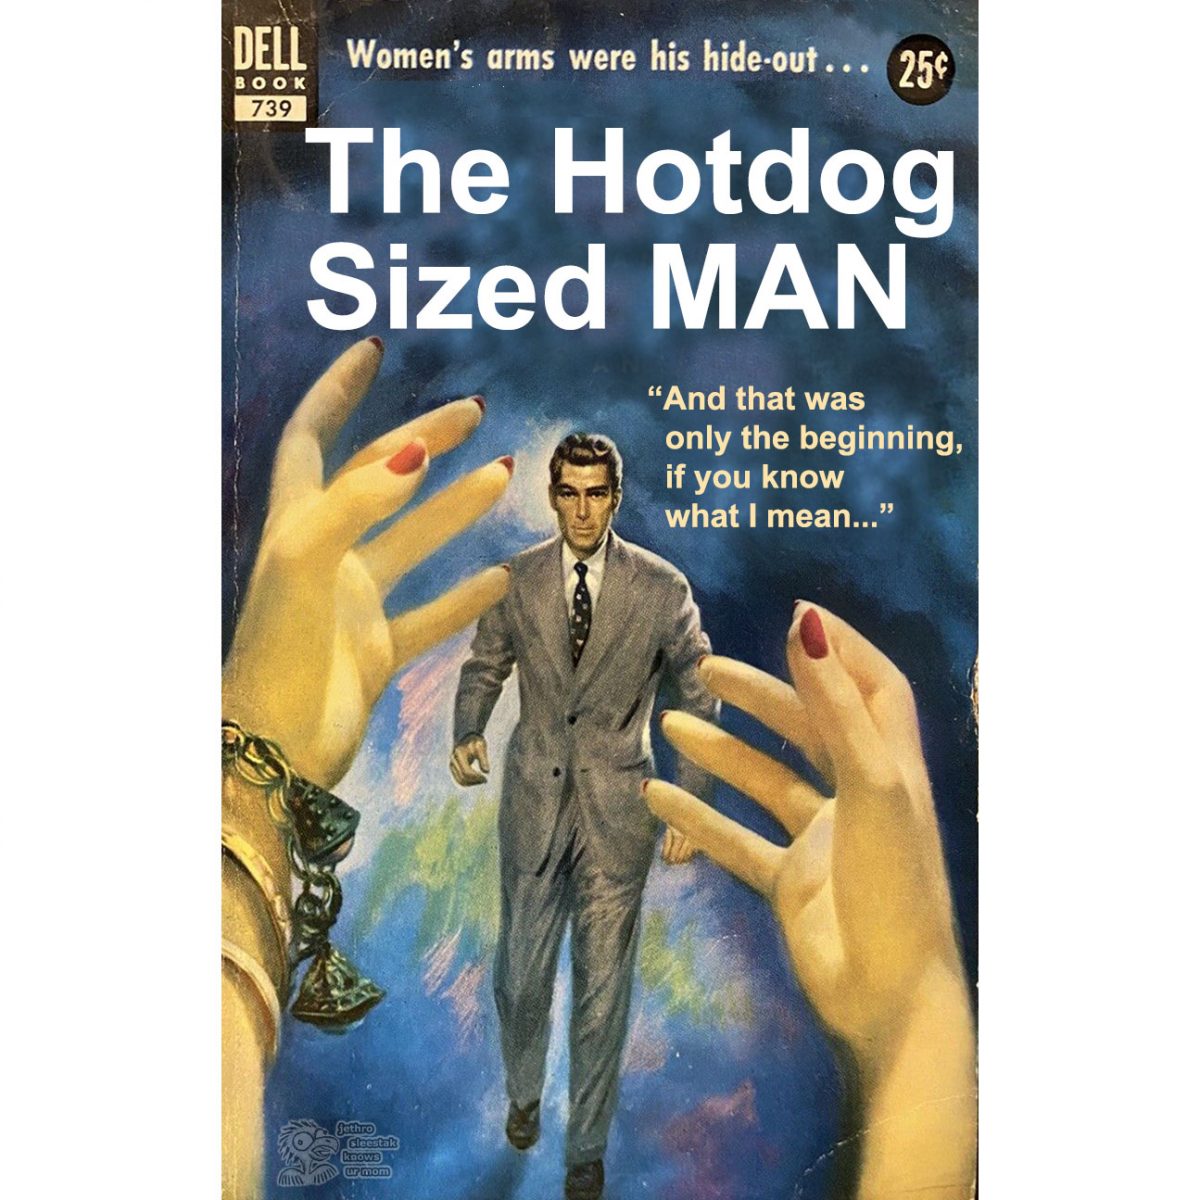 The Hotdog Sized MAN